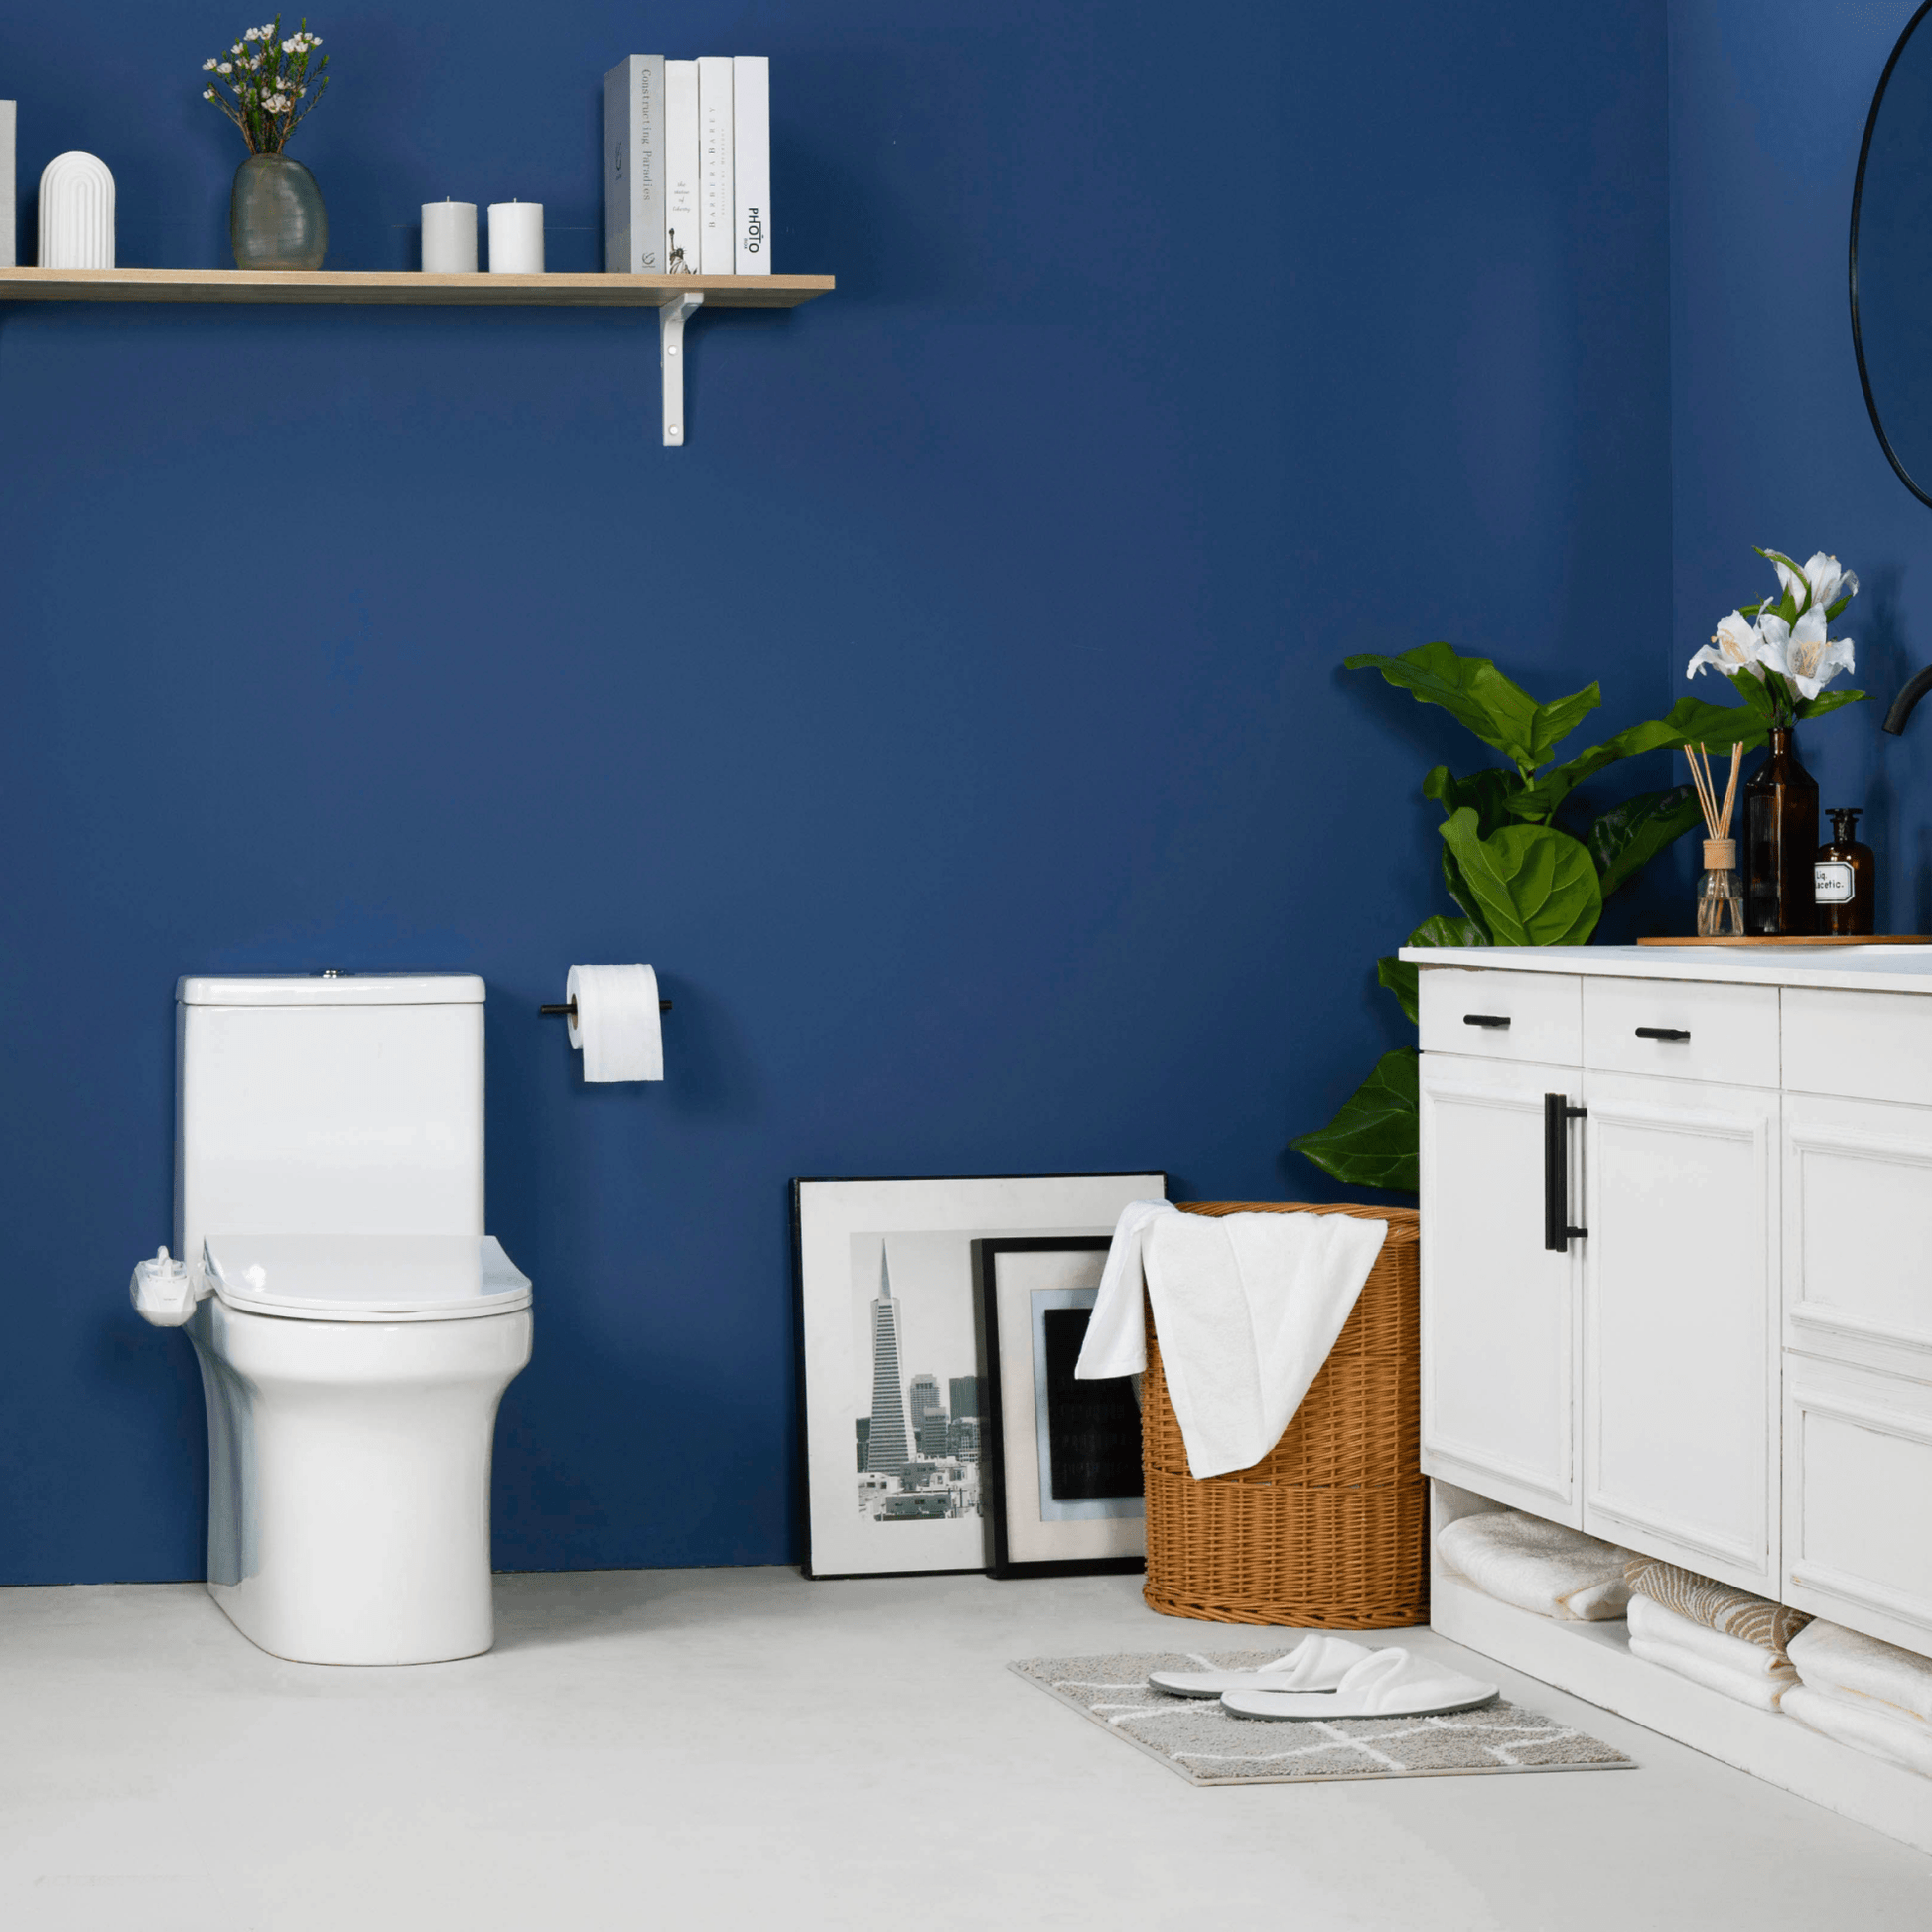 NEO 185 Plus White elevates your bathroom to a modern style